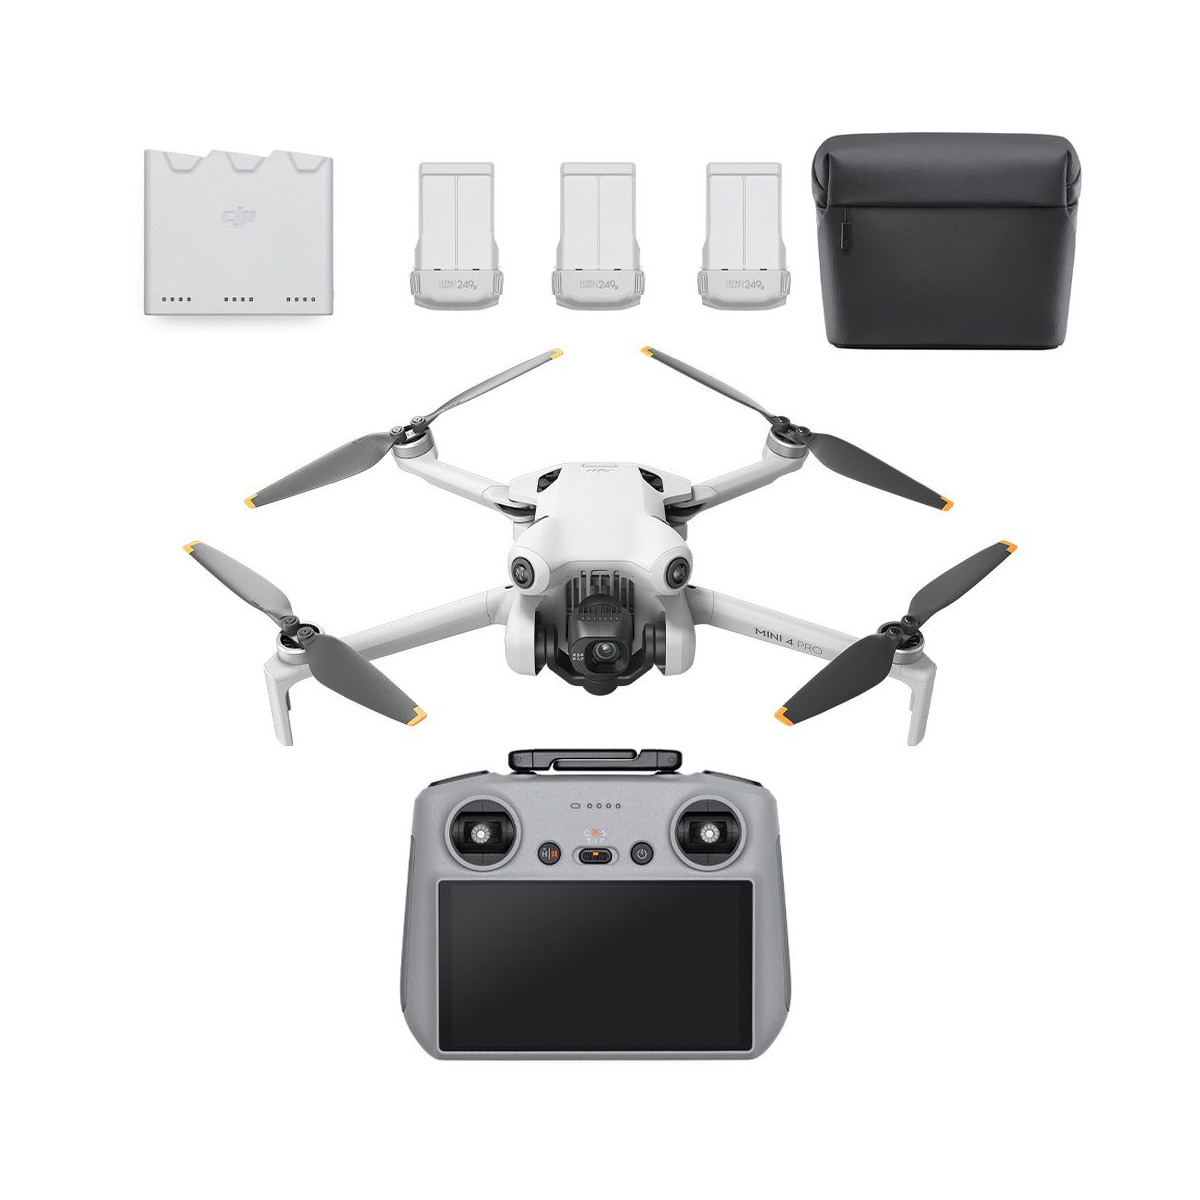 DJI Objectif grand angle pour DJI Mini 4 Pro - Accessoires drones